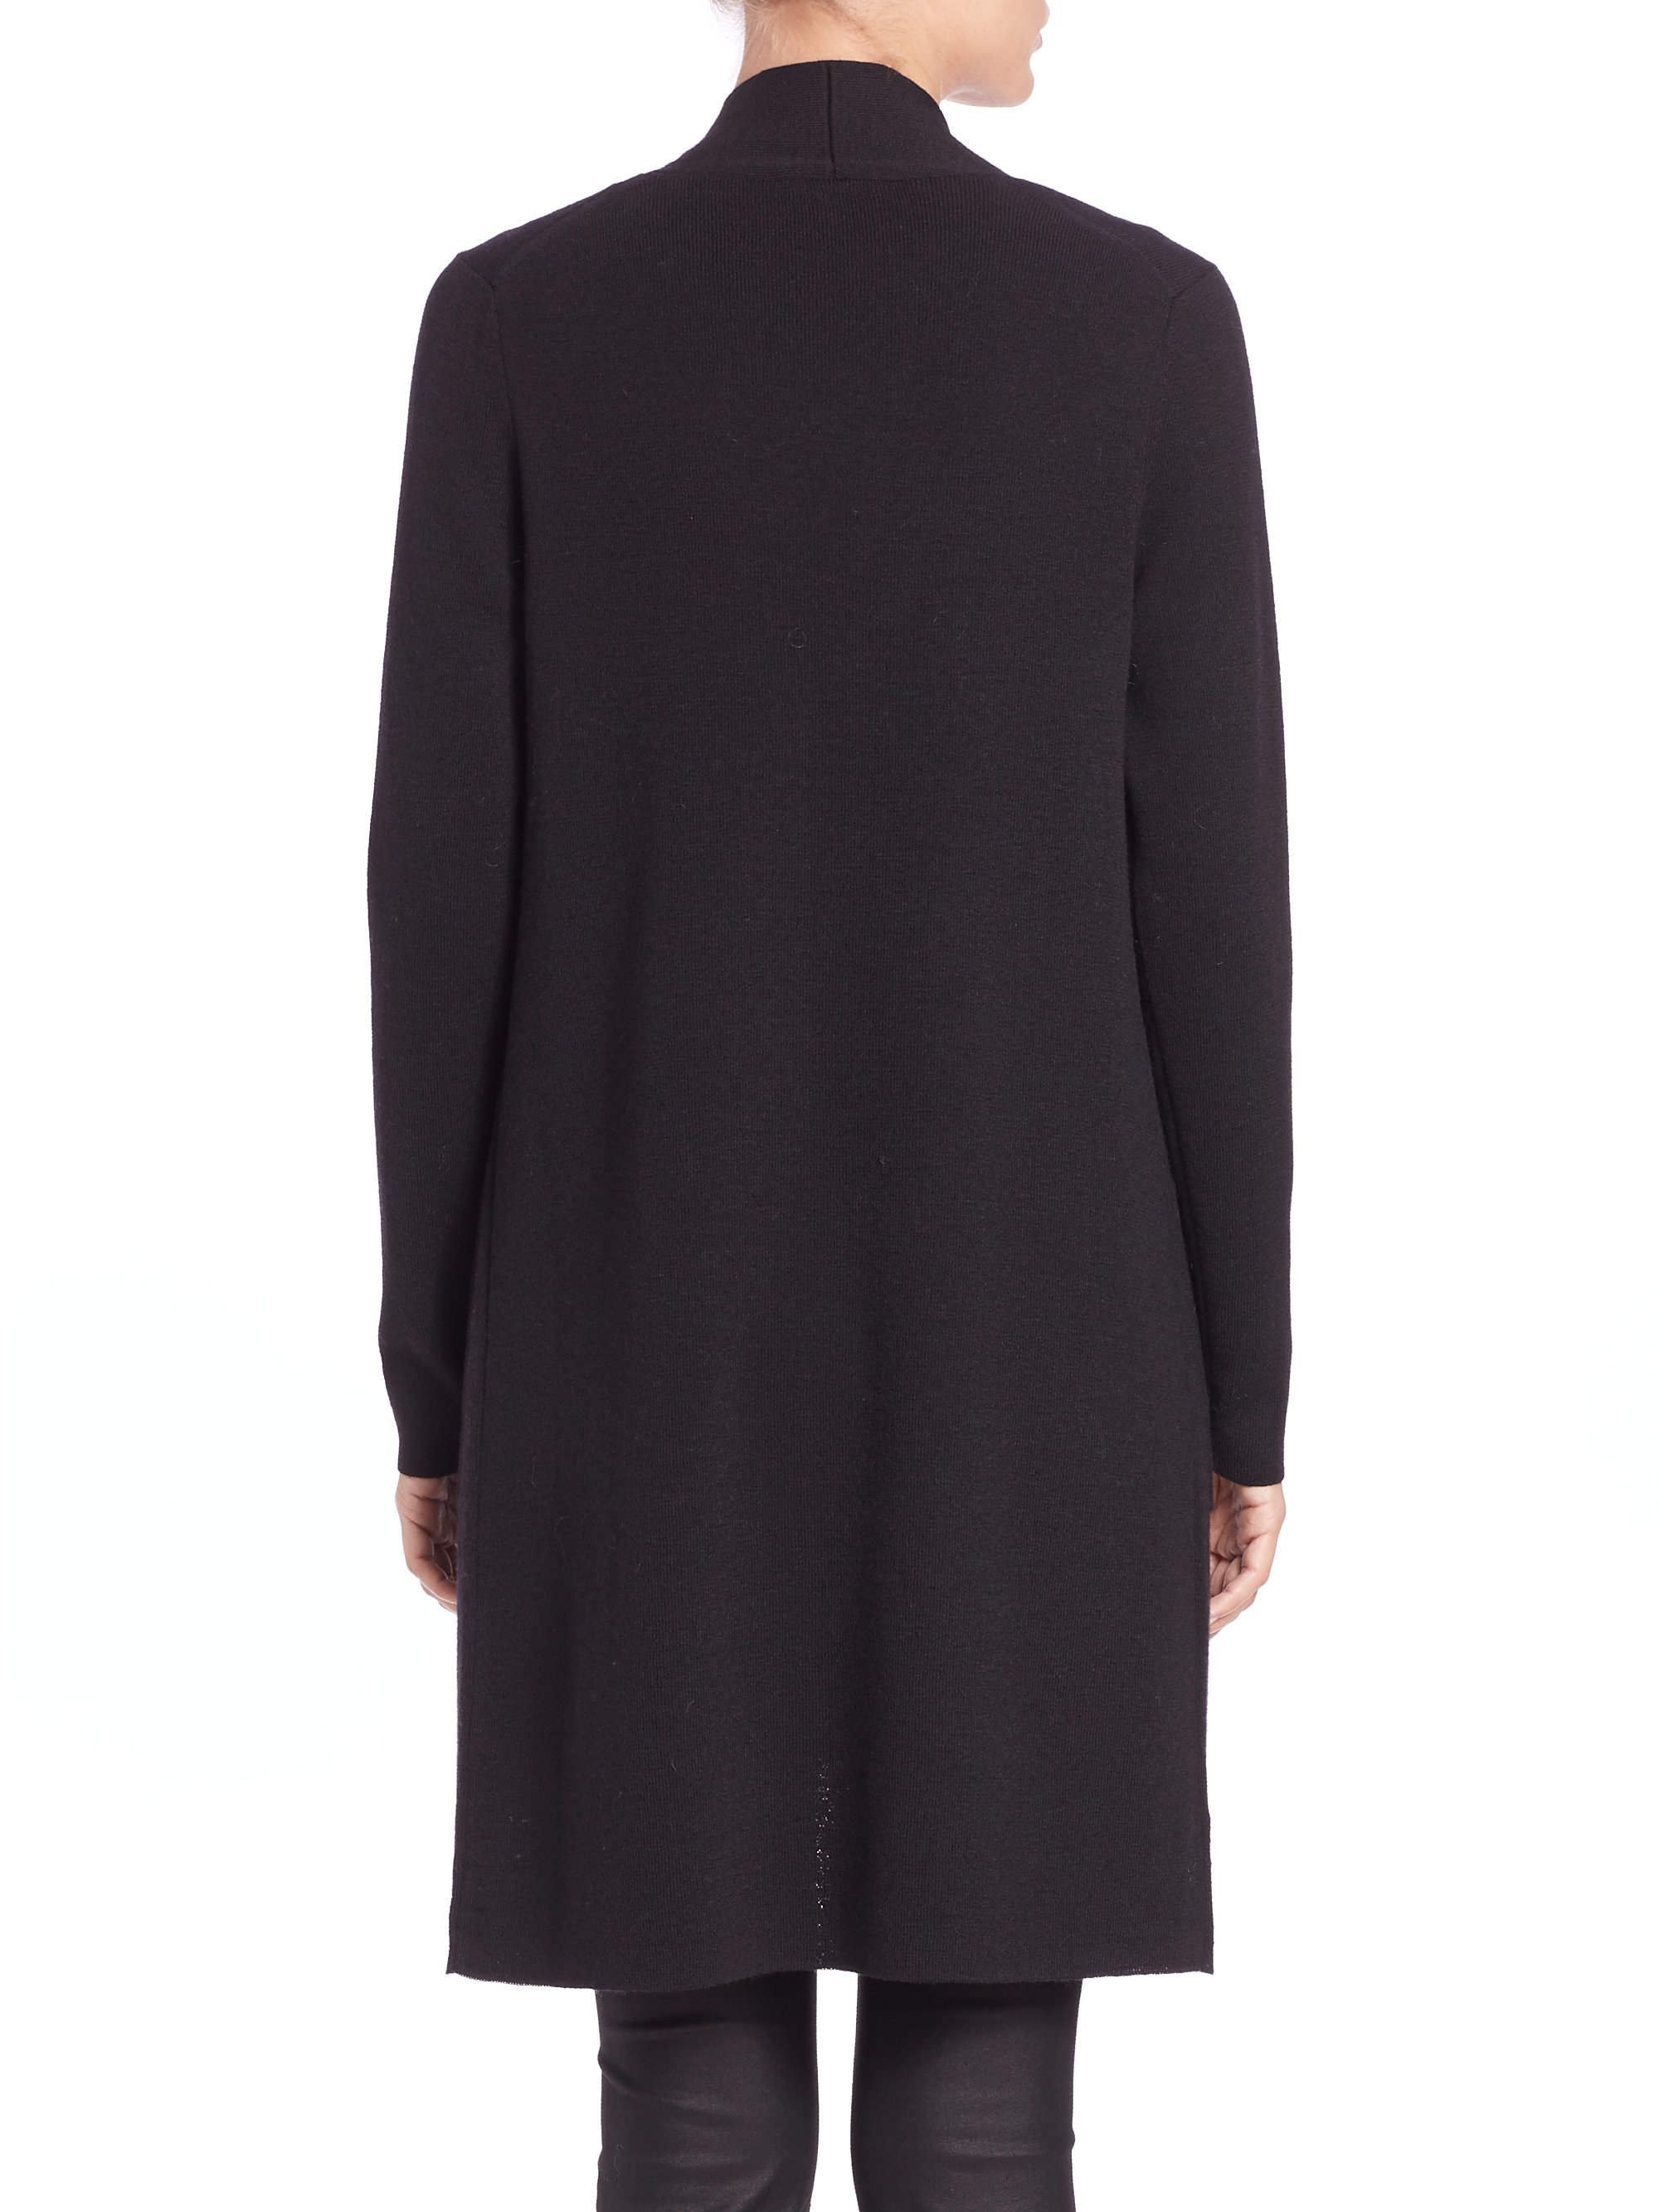 Eileen Fisher Icon Long Wool Cardigan in Black - Lyst